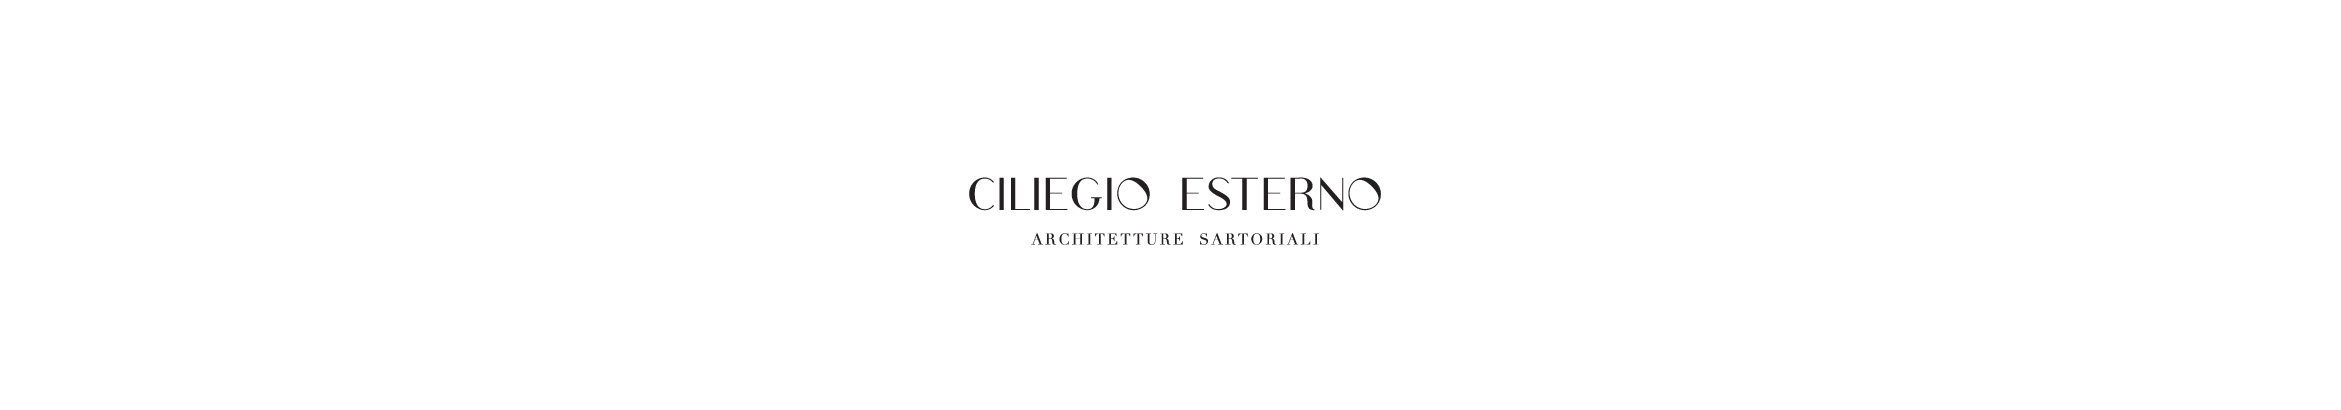 CiliegioEsterno Studio のプロファイルバナー